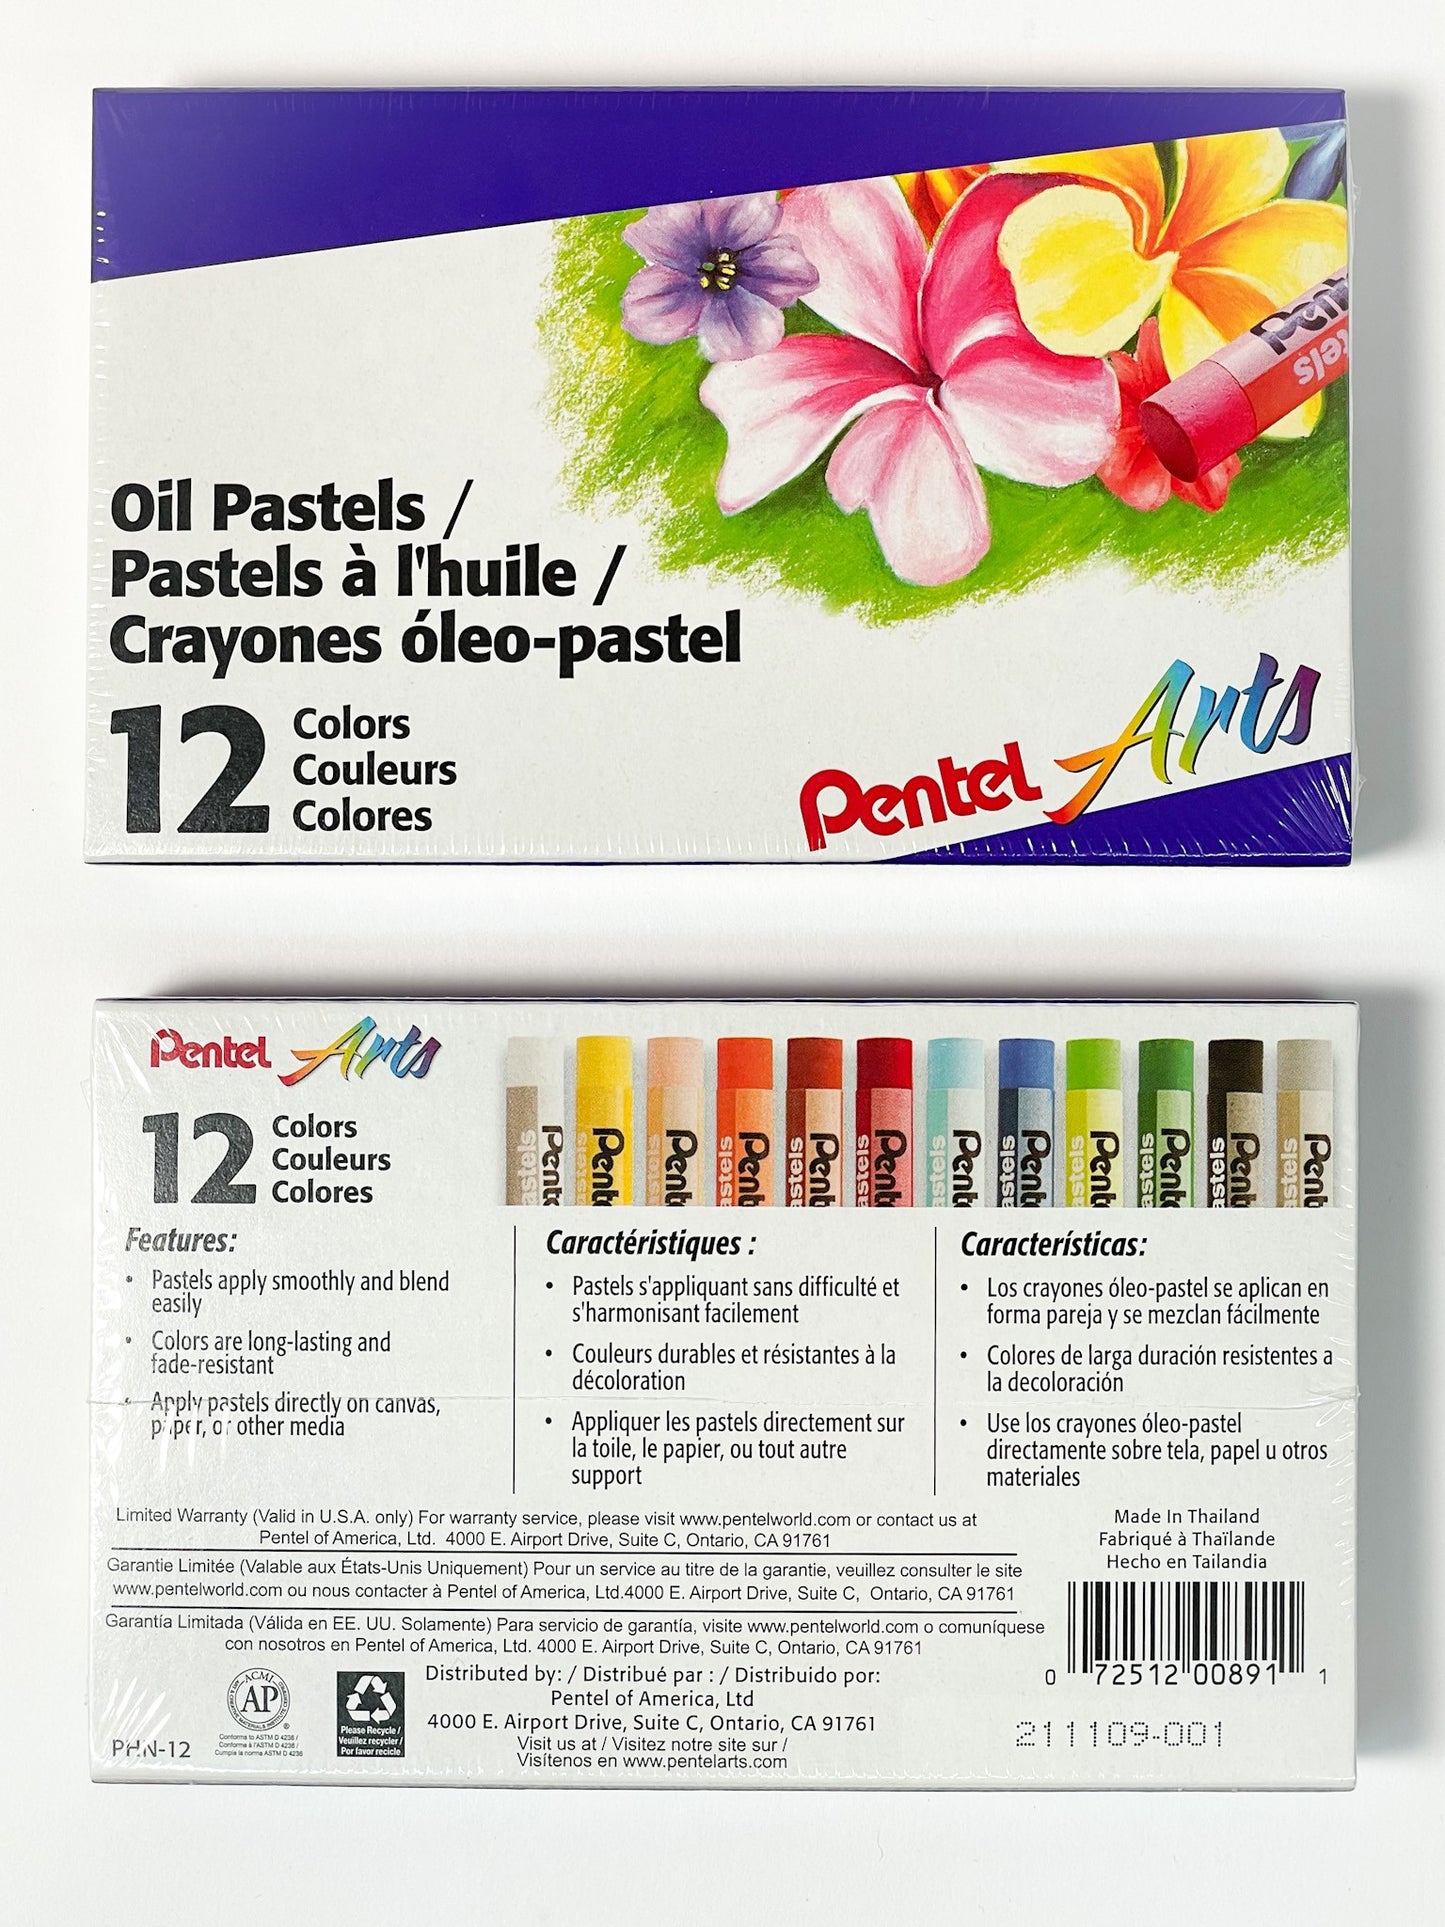 Pentel Arts Oil Pastel Sets (sets of 12, 16, 25, and 50)